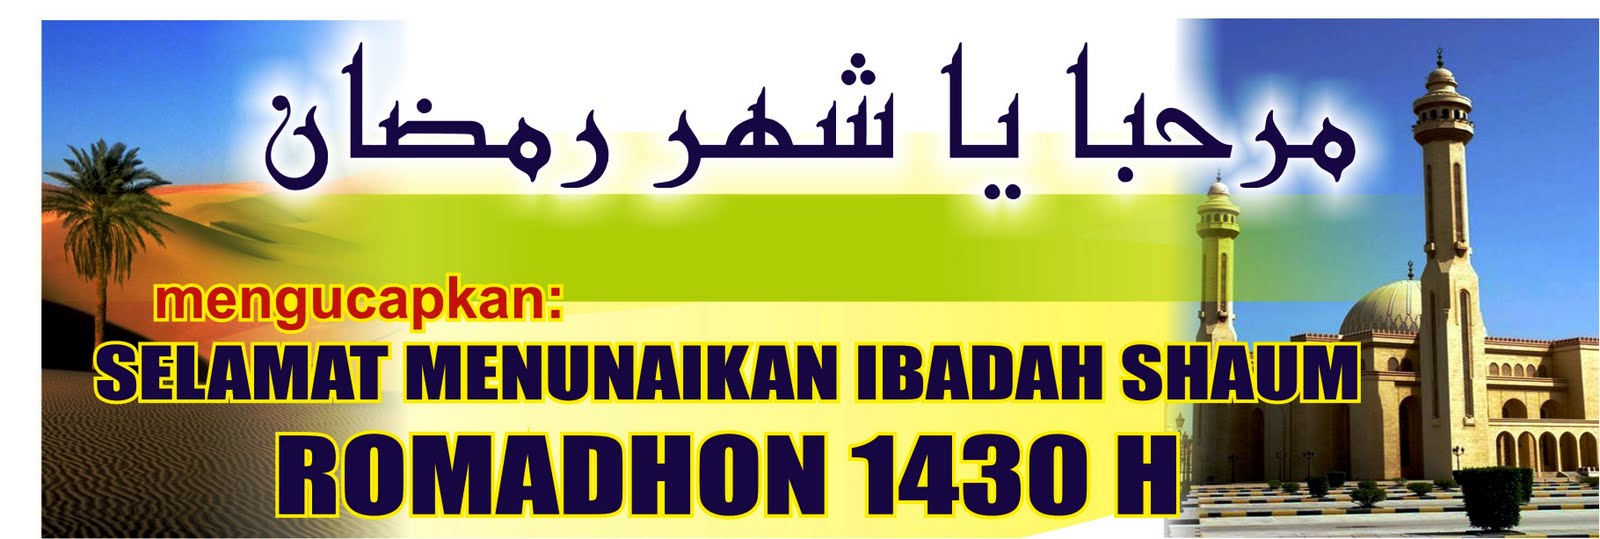 Contoh Banner Sambut Ramadhan - Gontoh